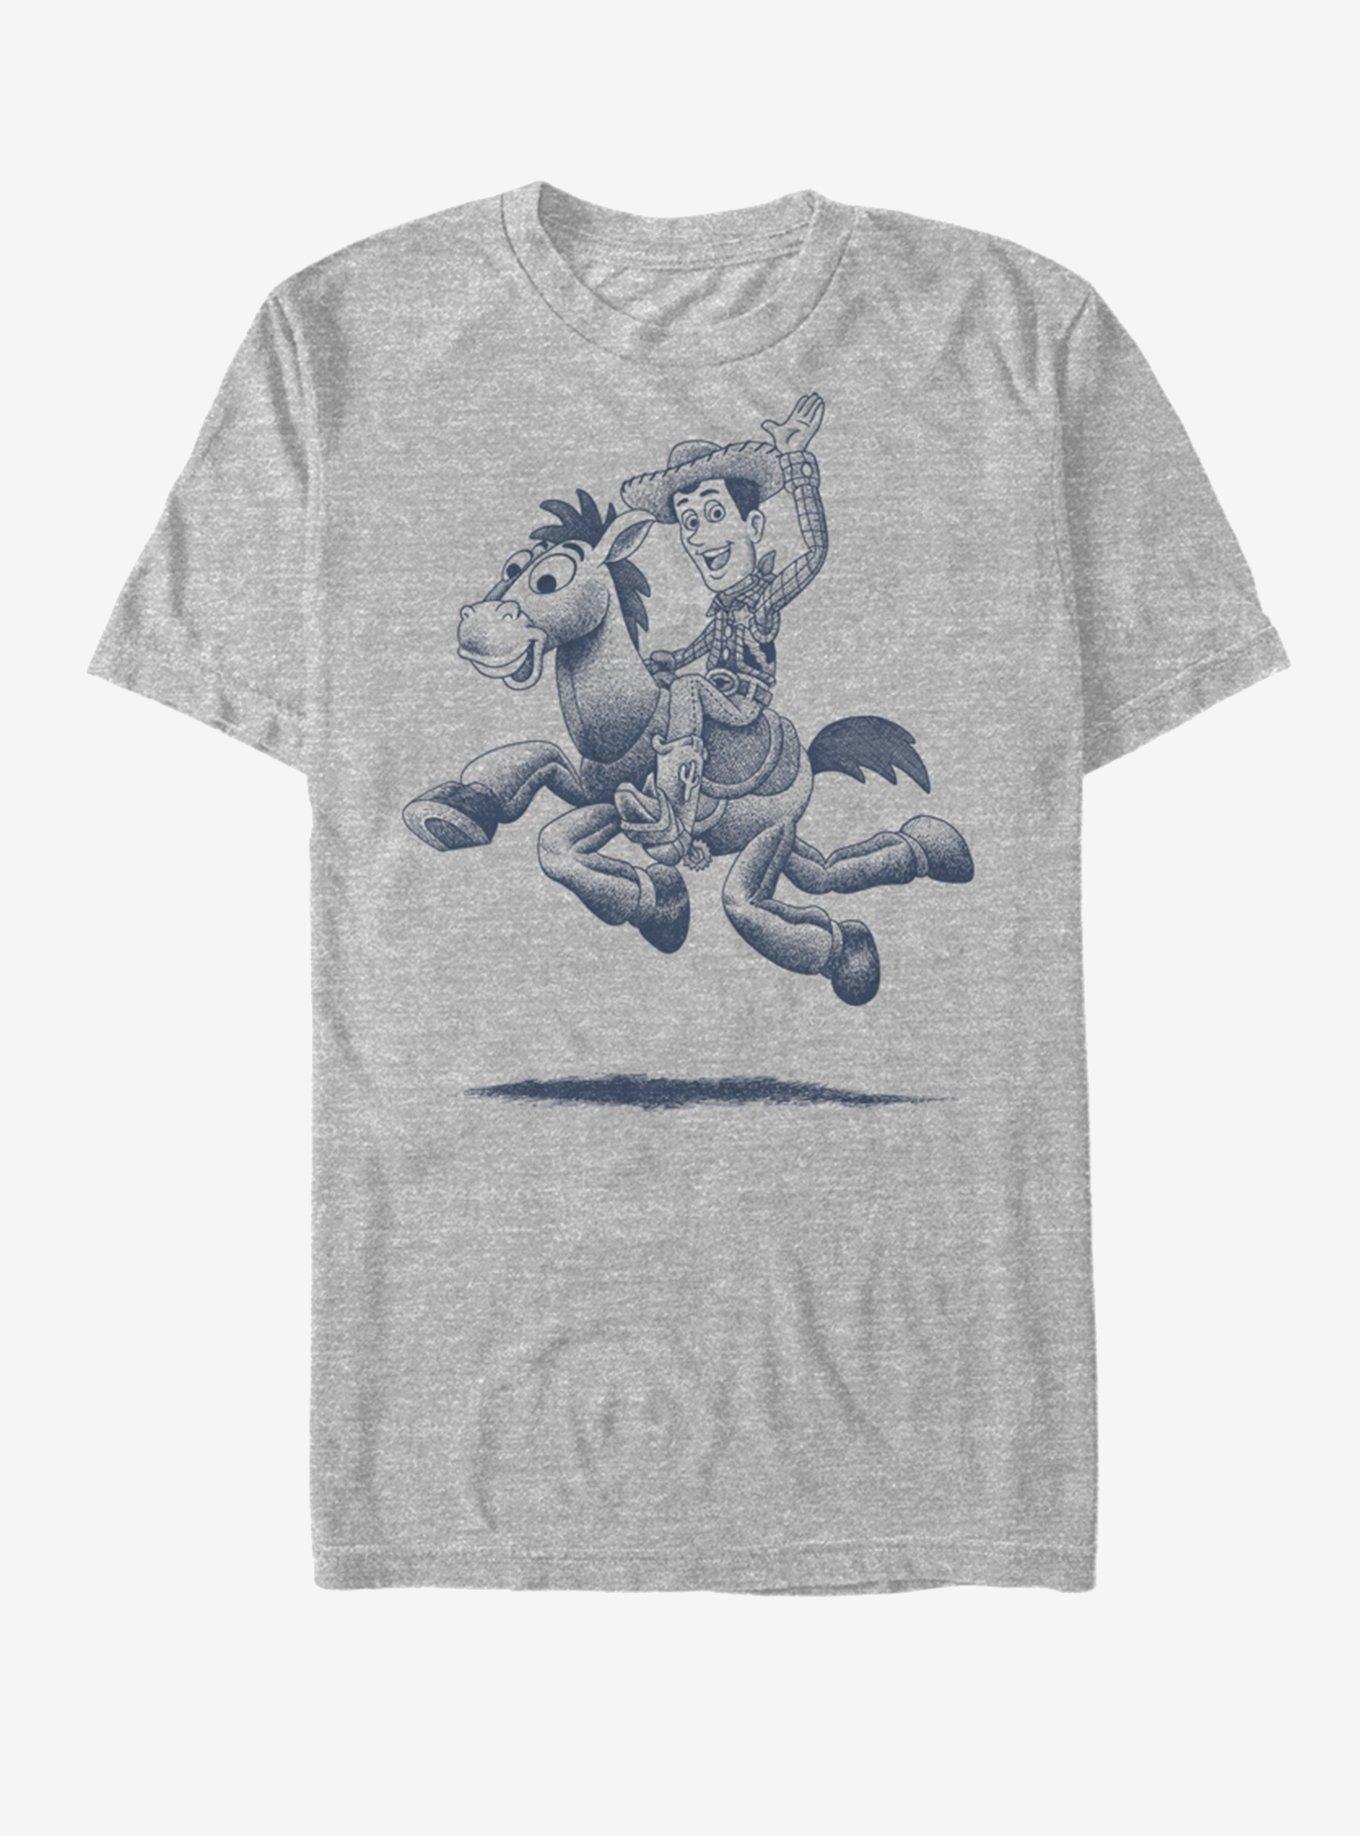 Disney Pixar Toy Story Sheriff Woody T-Shirt